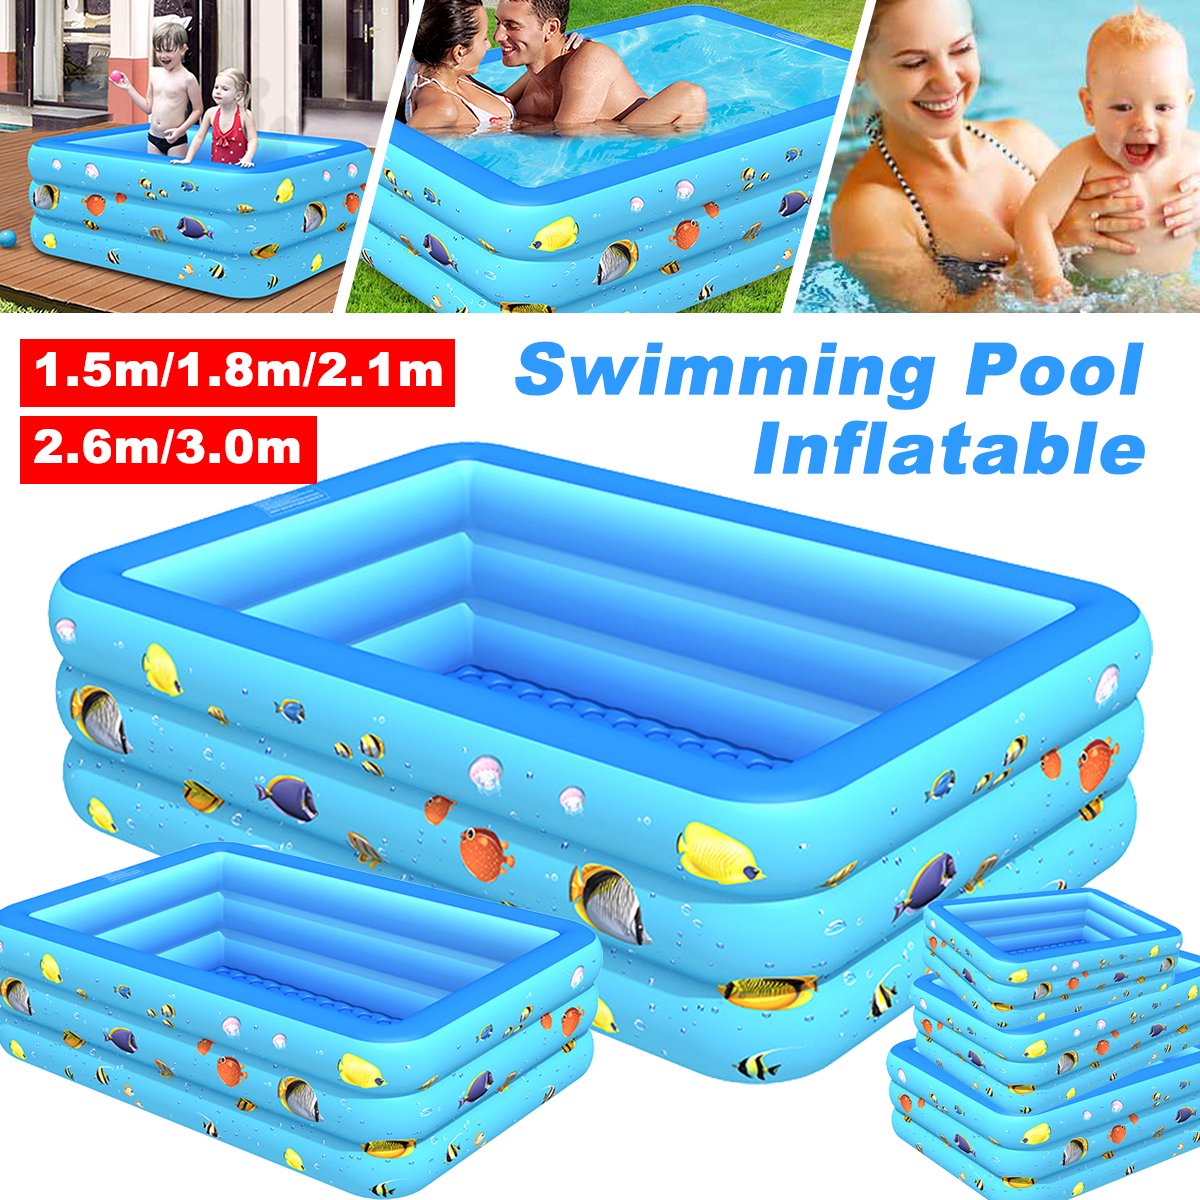 Coolike-Vierkant Opblaasbaar Zwembad-180x130x55 cm-Opblaasbare zwembaden-Familiebad- Kinderzwembad-Opblaaszwembad-blauw